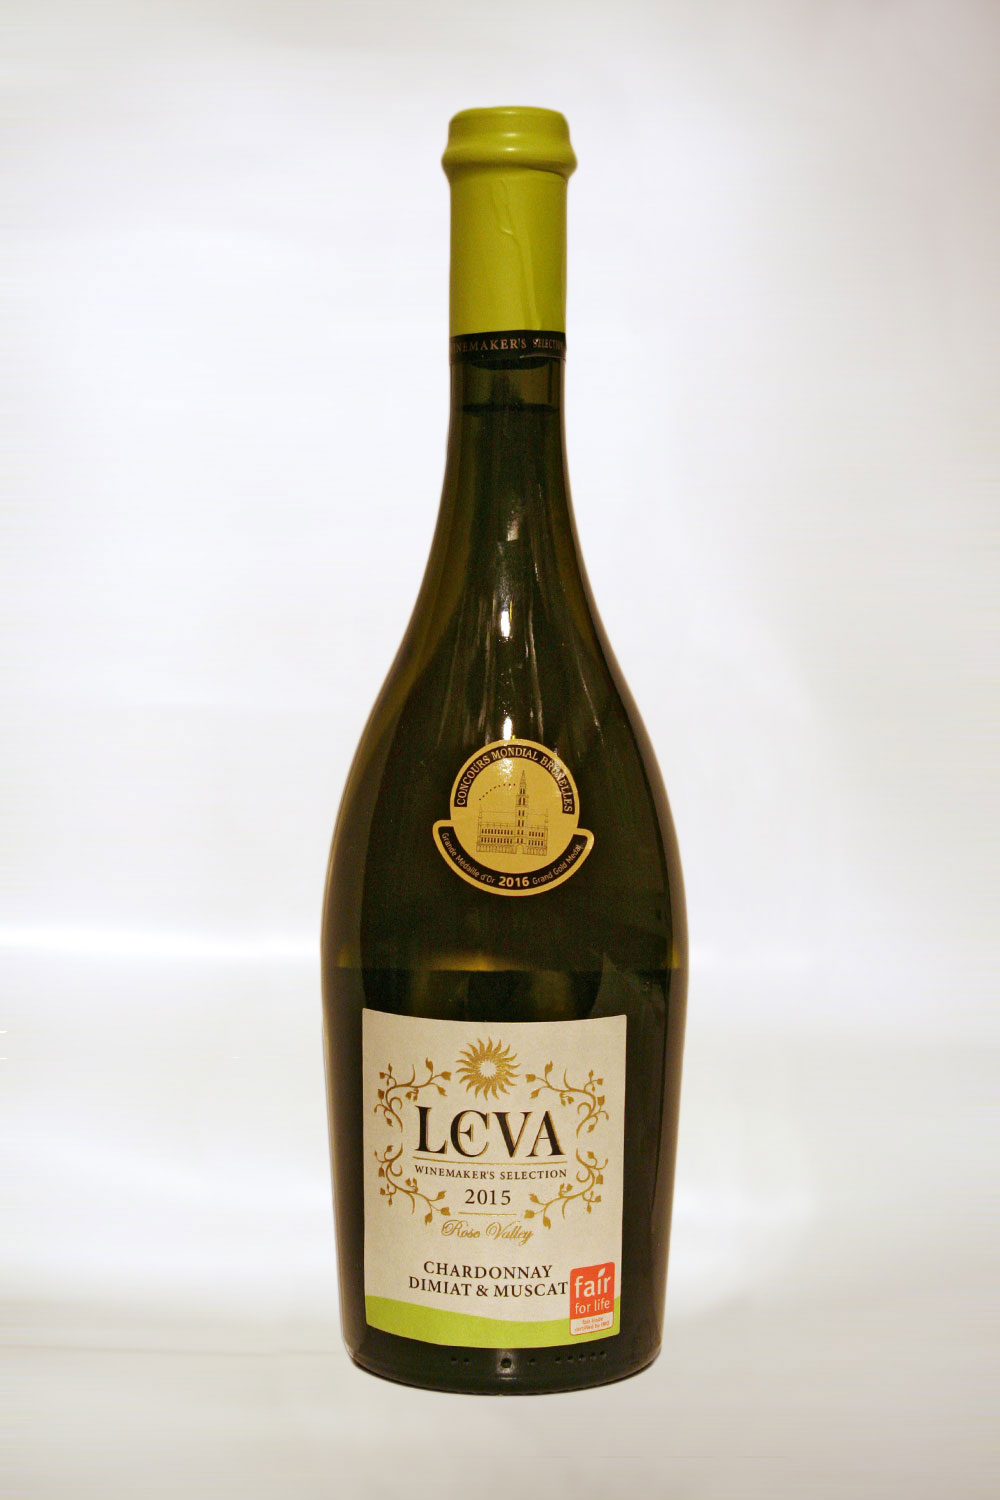 Leva Chardonnay Dimiat & Muscat 2015